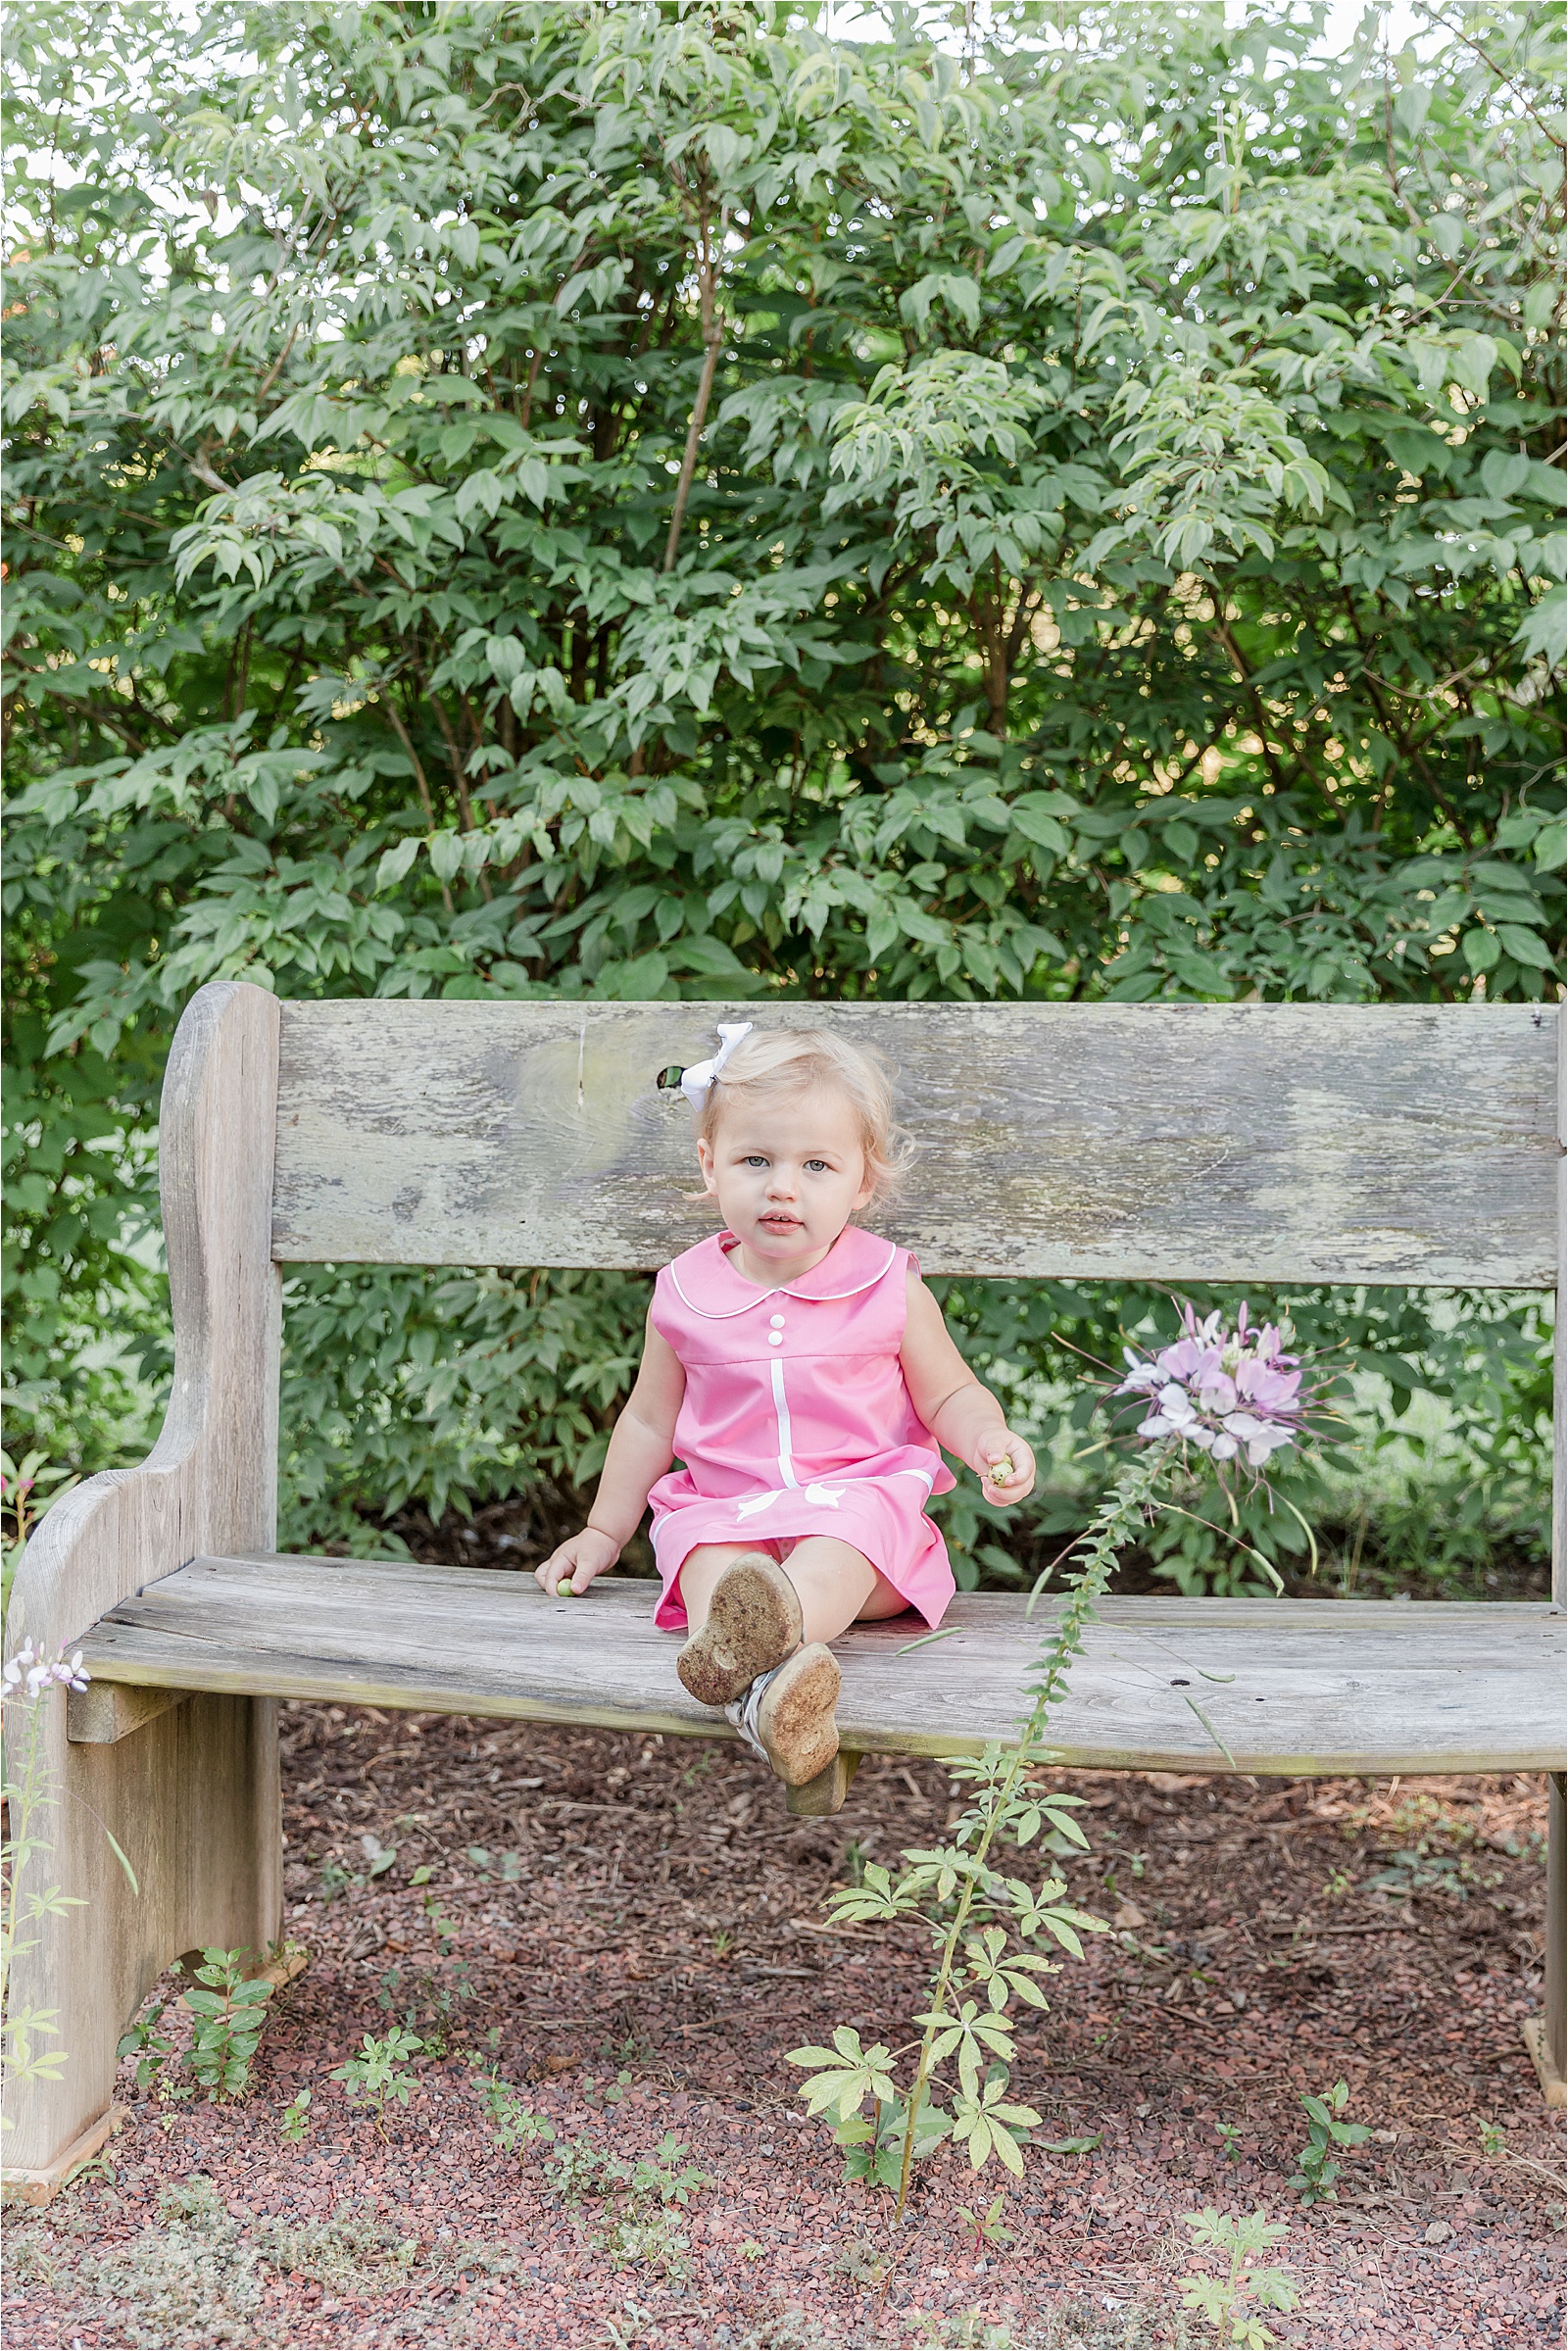 Toddler on bench in garden